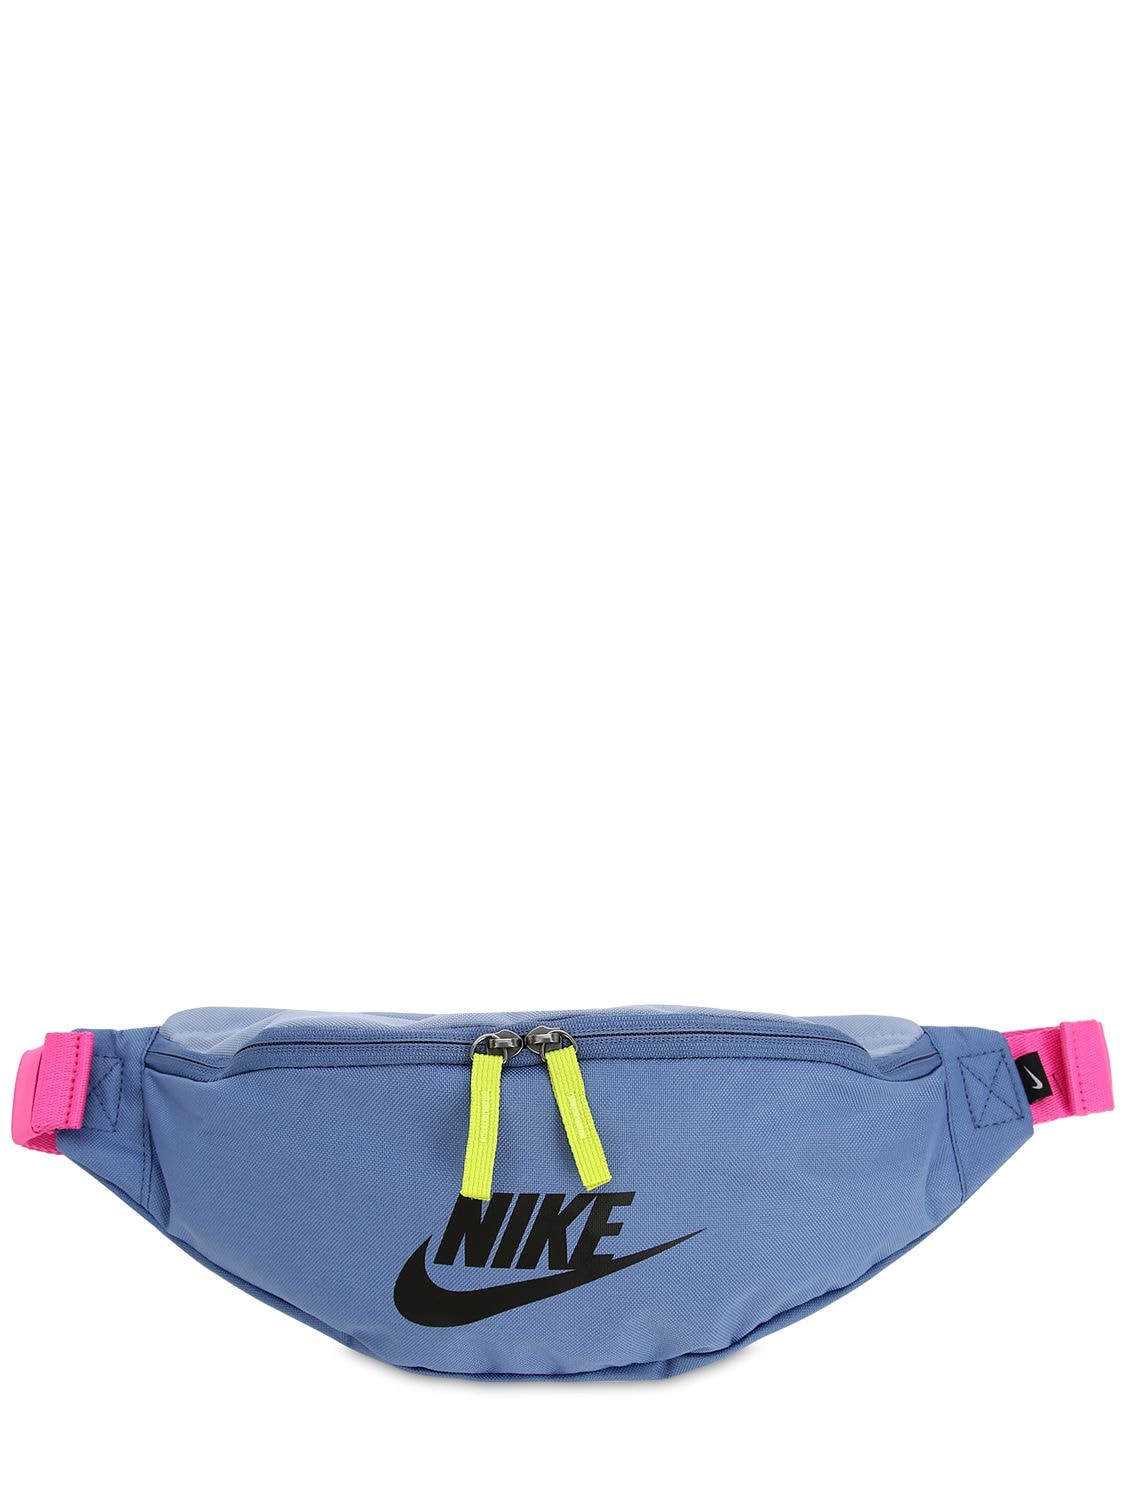 Nike Sportswear Heritage Techno Belt Bag In Avio,fuchsia